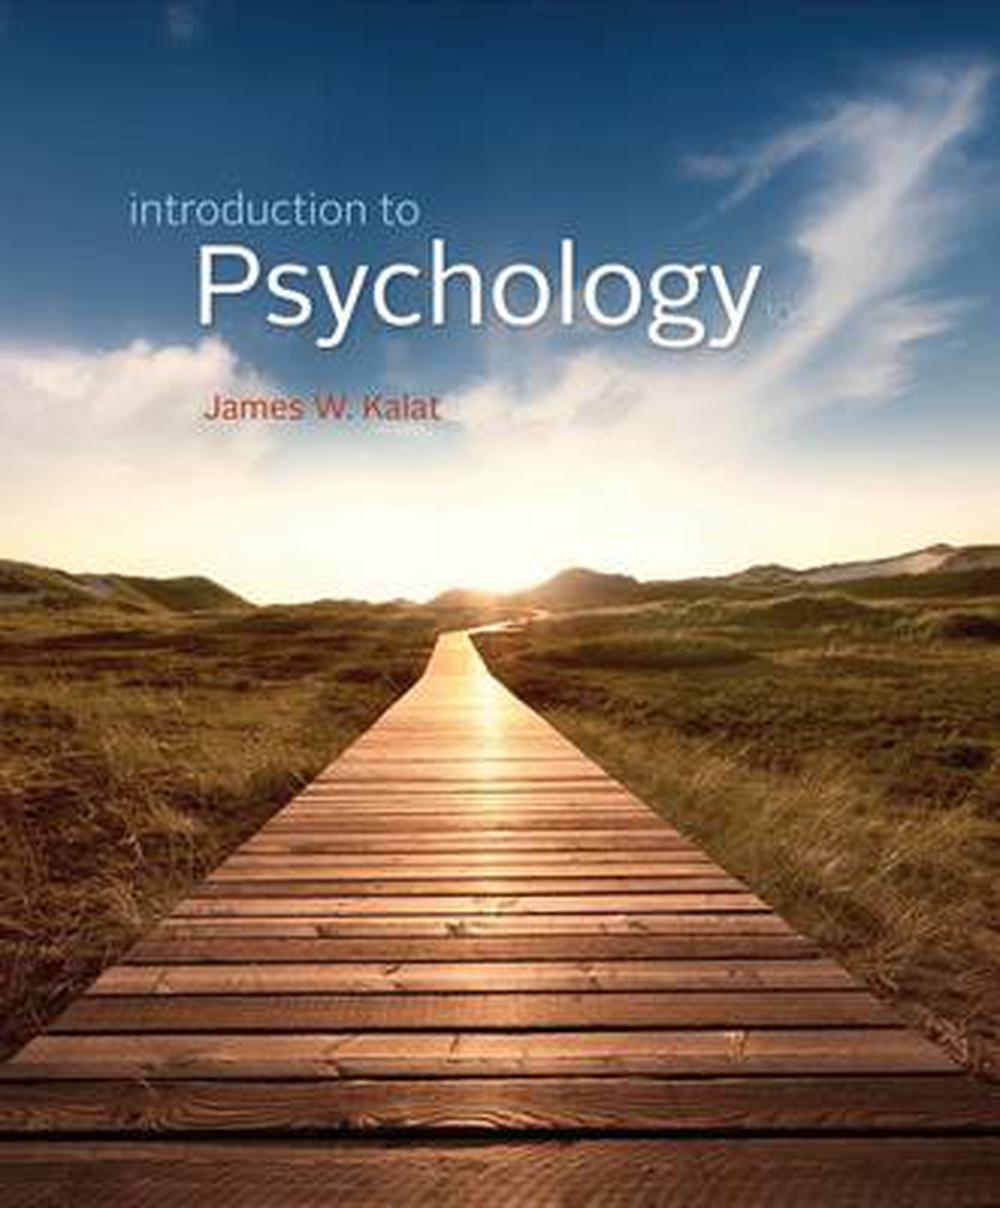 Introduction to Psychology by James W. Kalat (English) Paperback Book Free Shipp 9781133956600